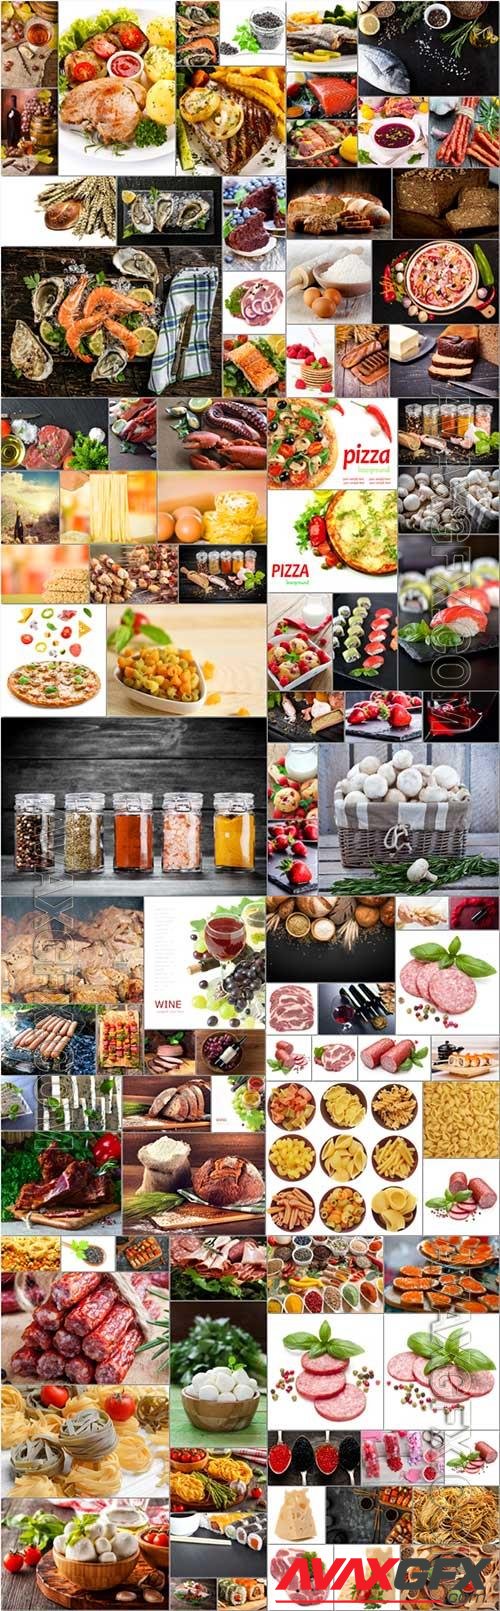 Food, meat, vegetables, fruits, fish, stock photo bundle vol 6